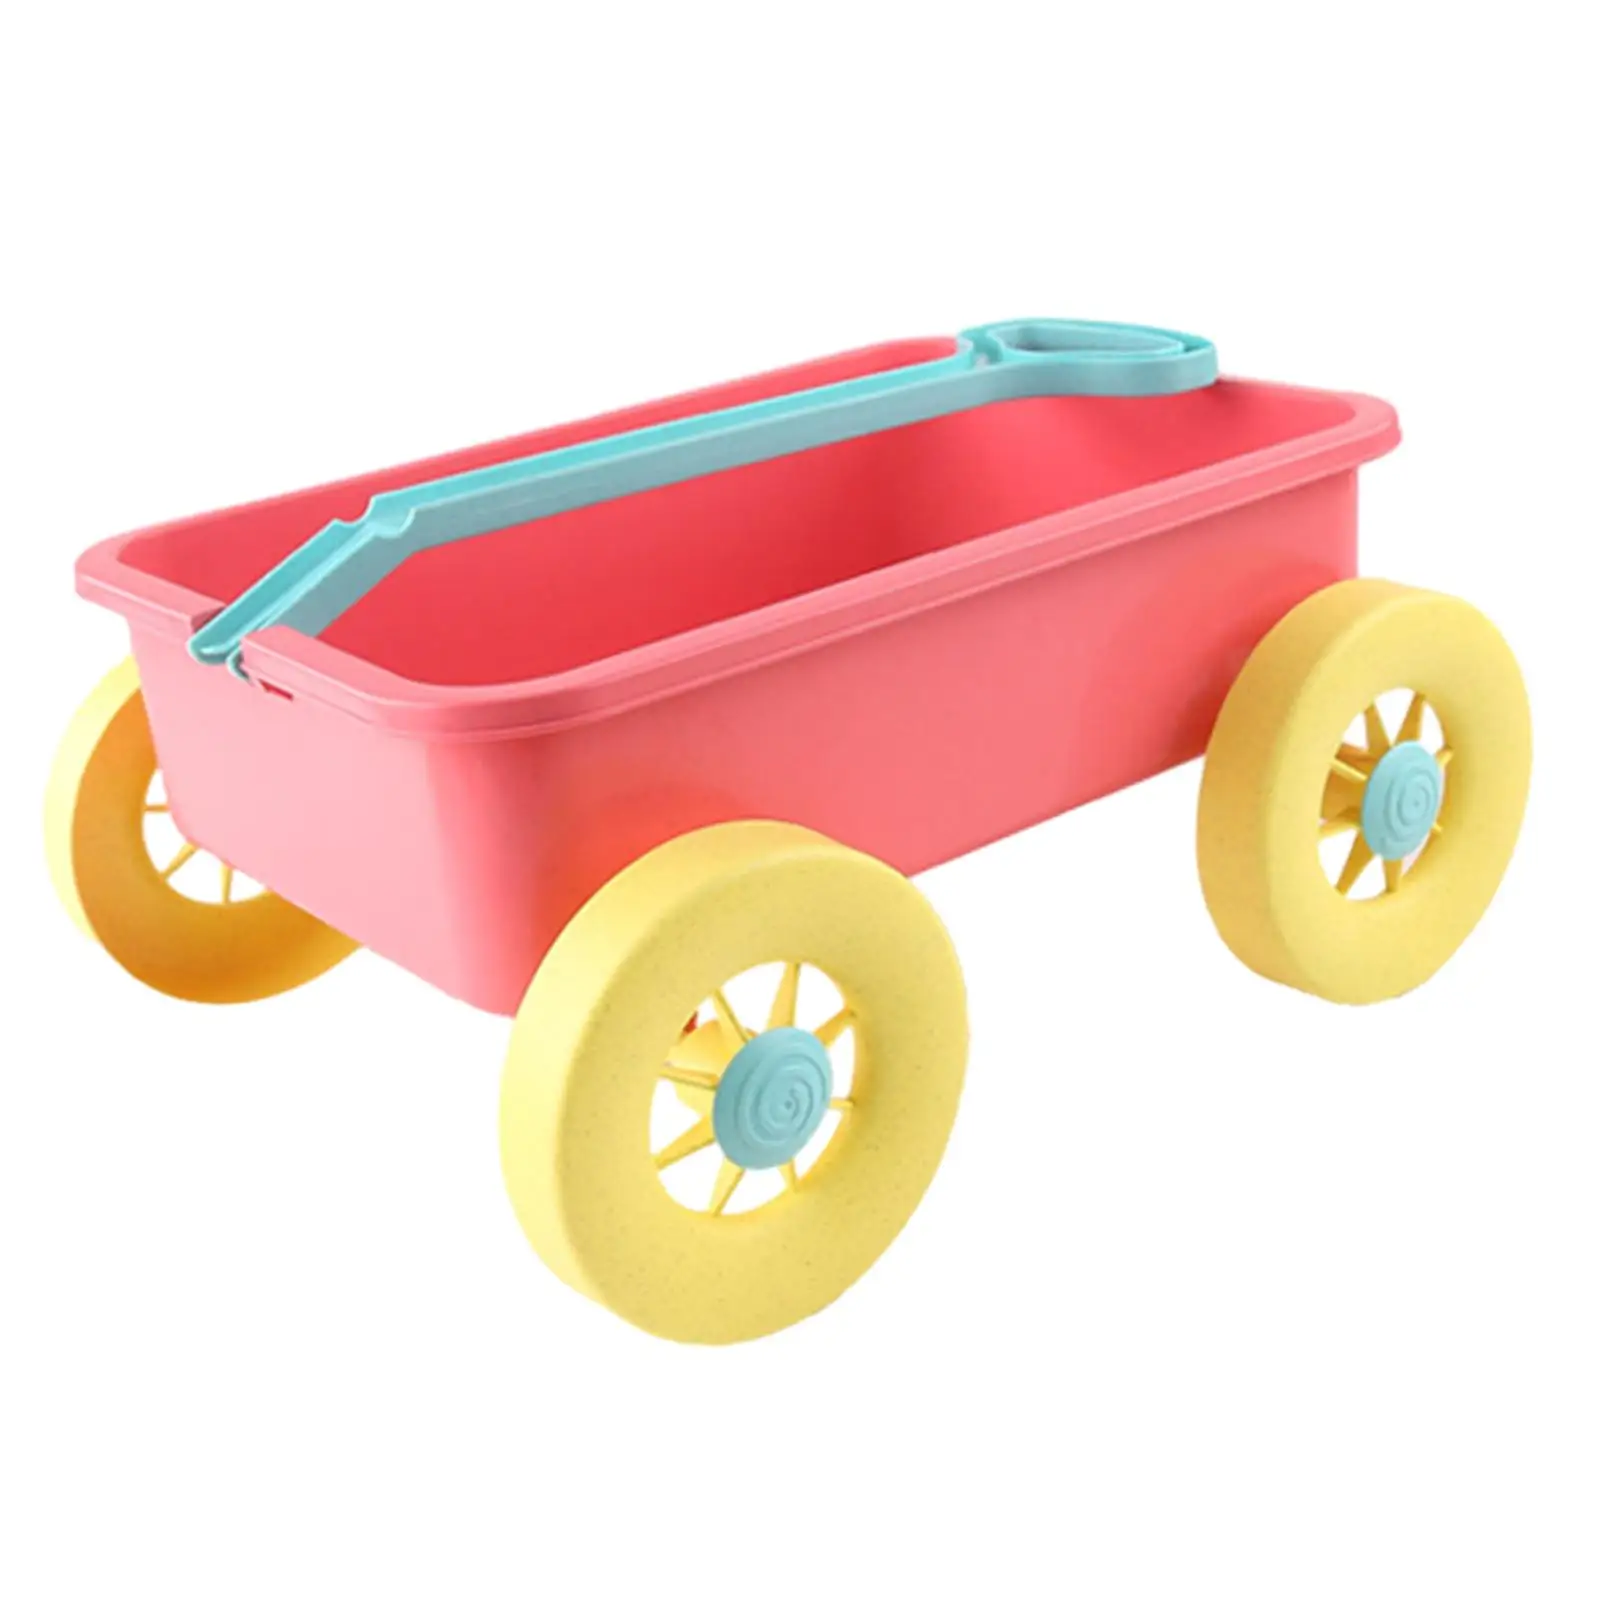 Kid Wagon Toy Kid Outdoor Toy Children Wagon Cart for Summer Beach Outdoor